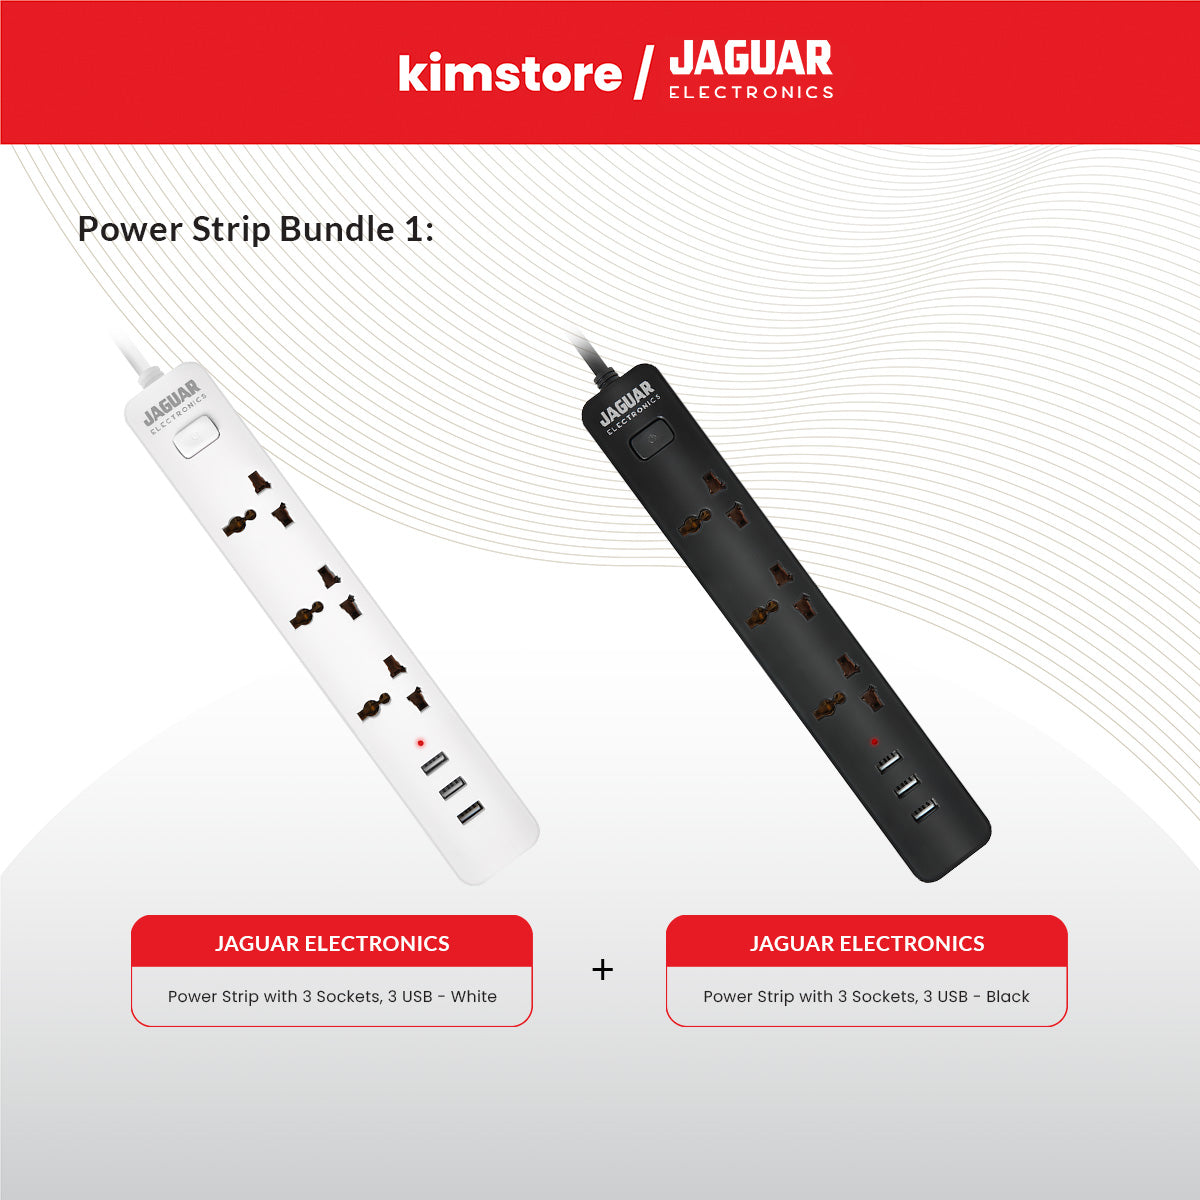 Jaguar Electronics Power Strip with 3 Sockets, 3 USB